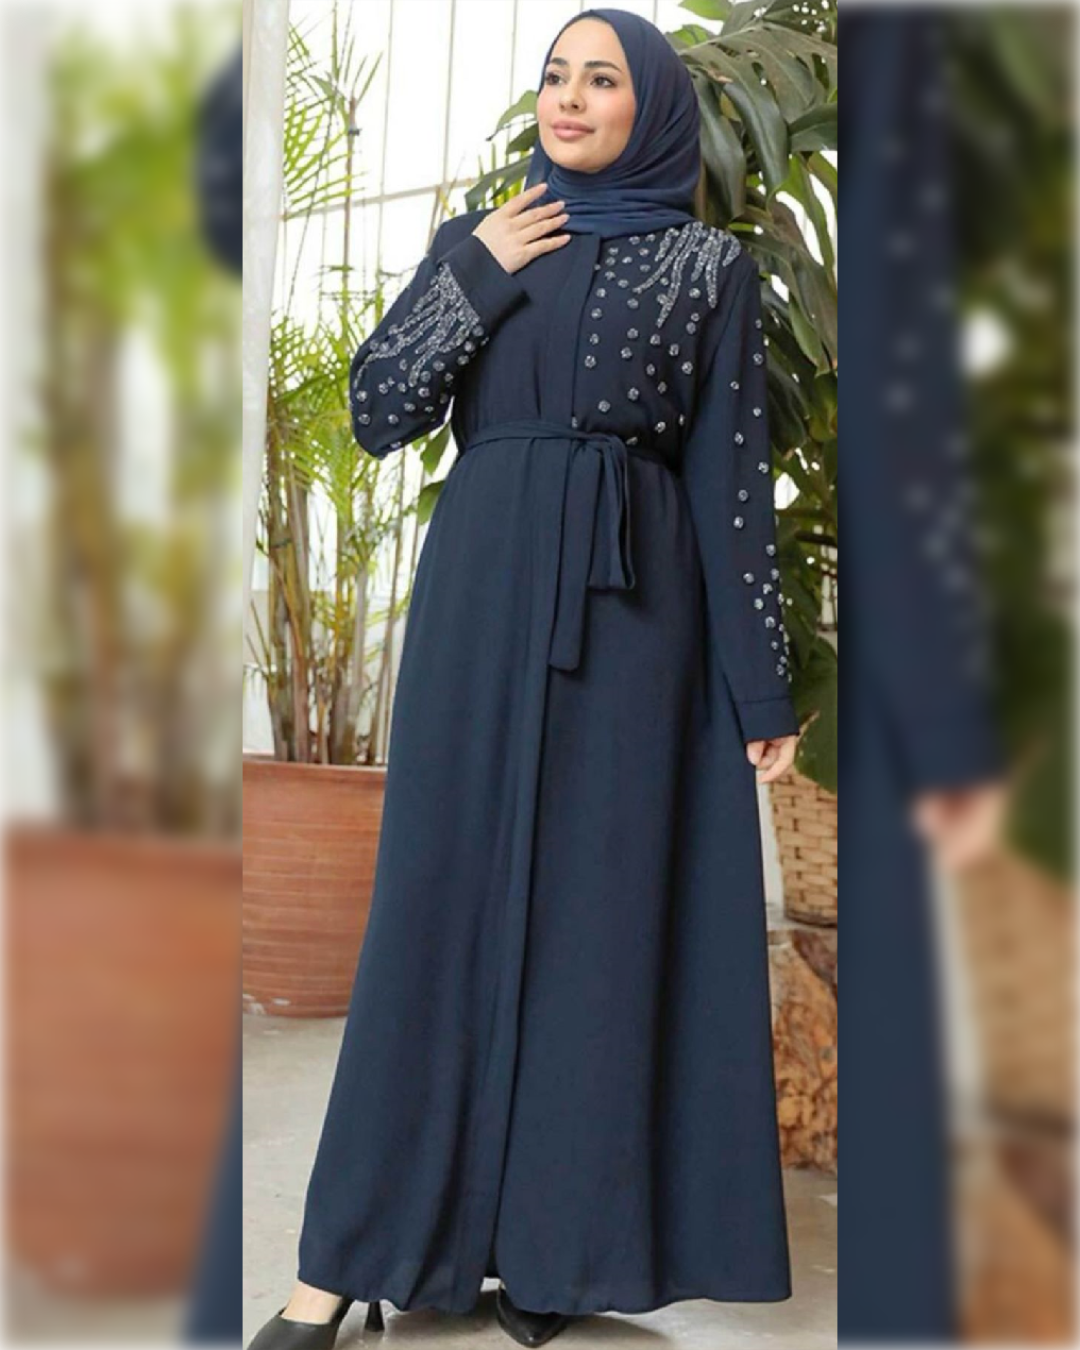 Fatimah Elegant Abaya in Navy Shade for Occasions  عباءة فاطمة الأنيقة للمناسبات باللون الكحلي الجميل